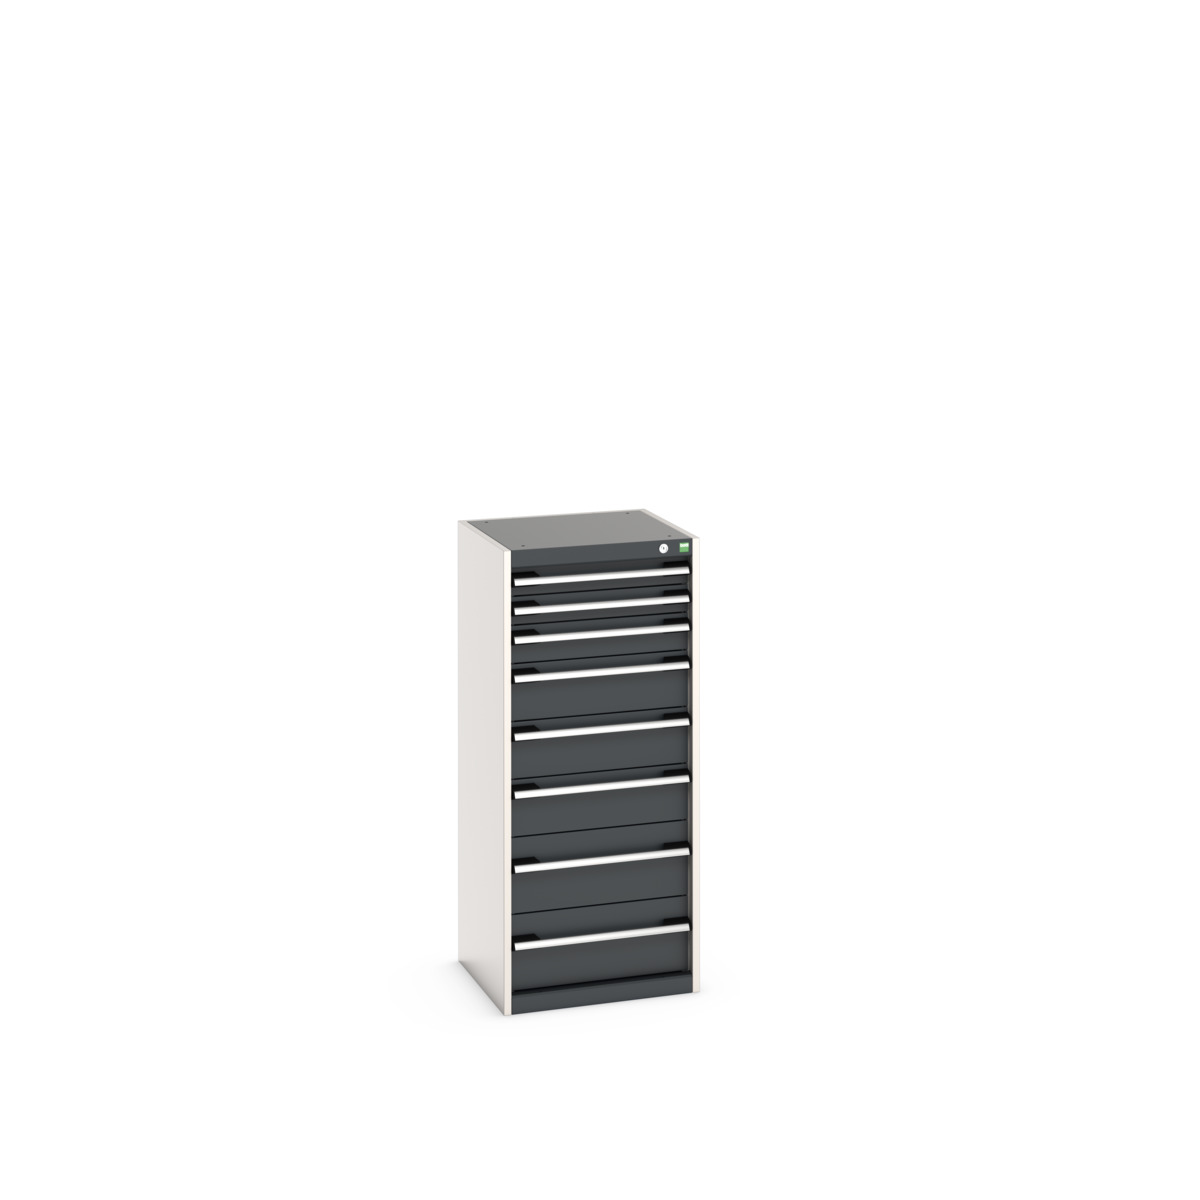 40010121. - cubio drawer cabinet